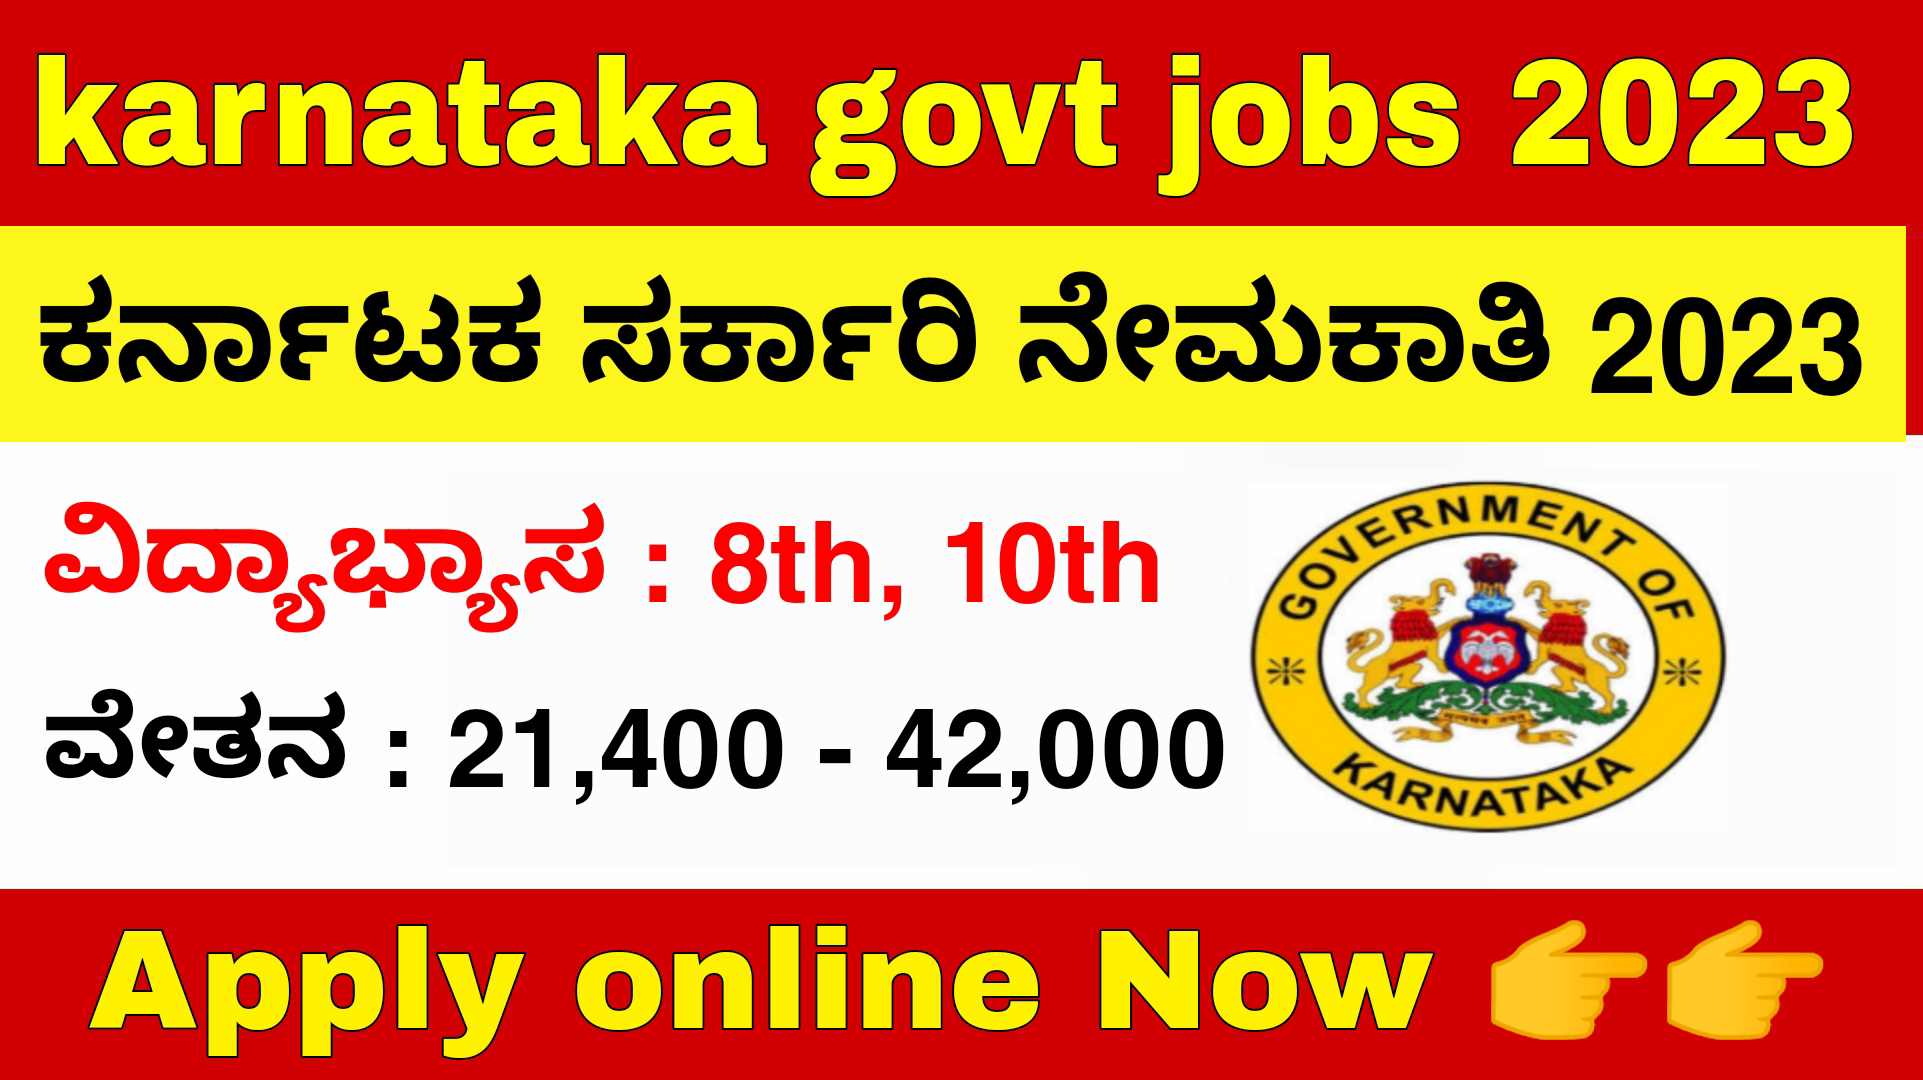 karnataka govt jobs 2023